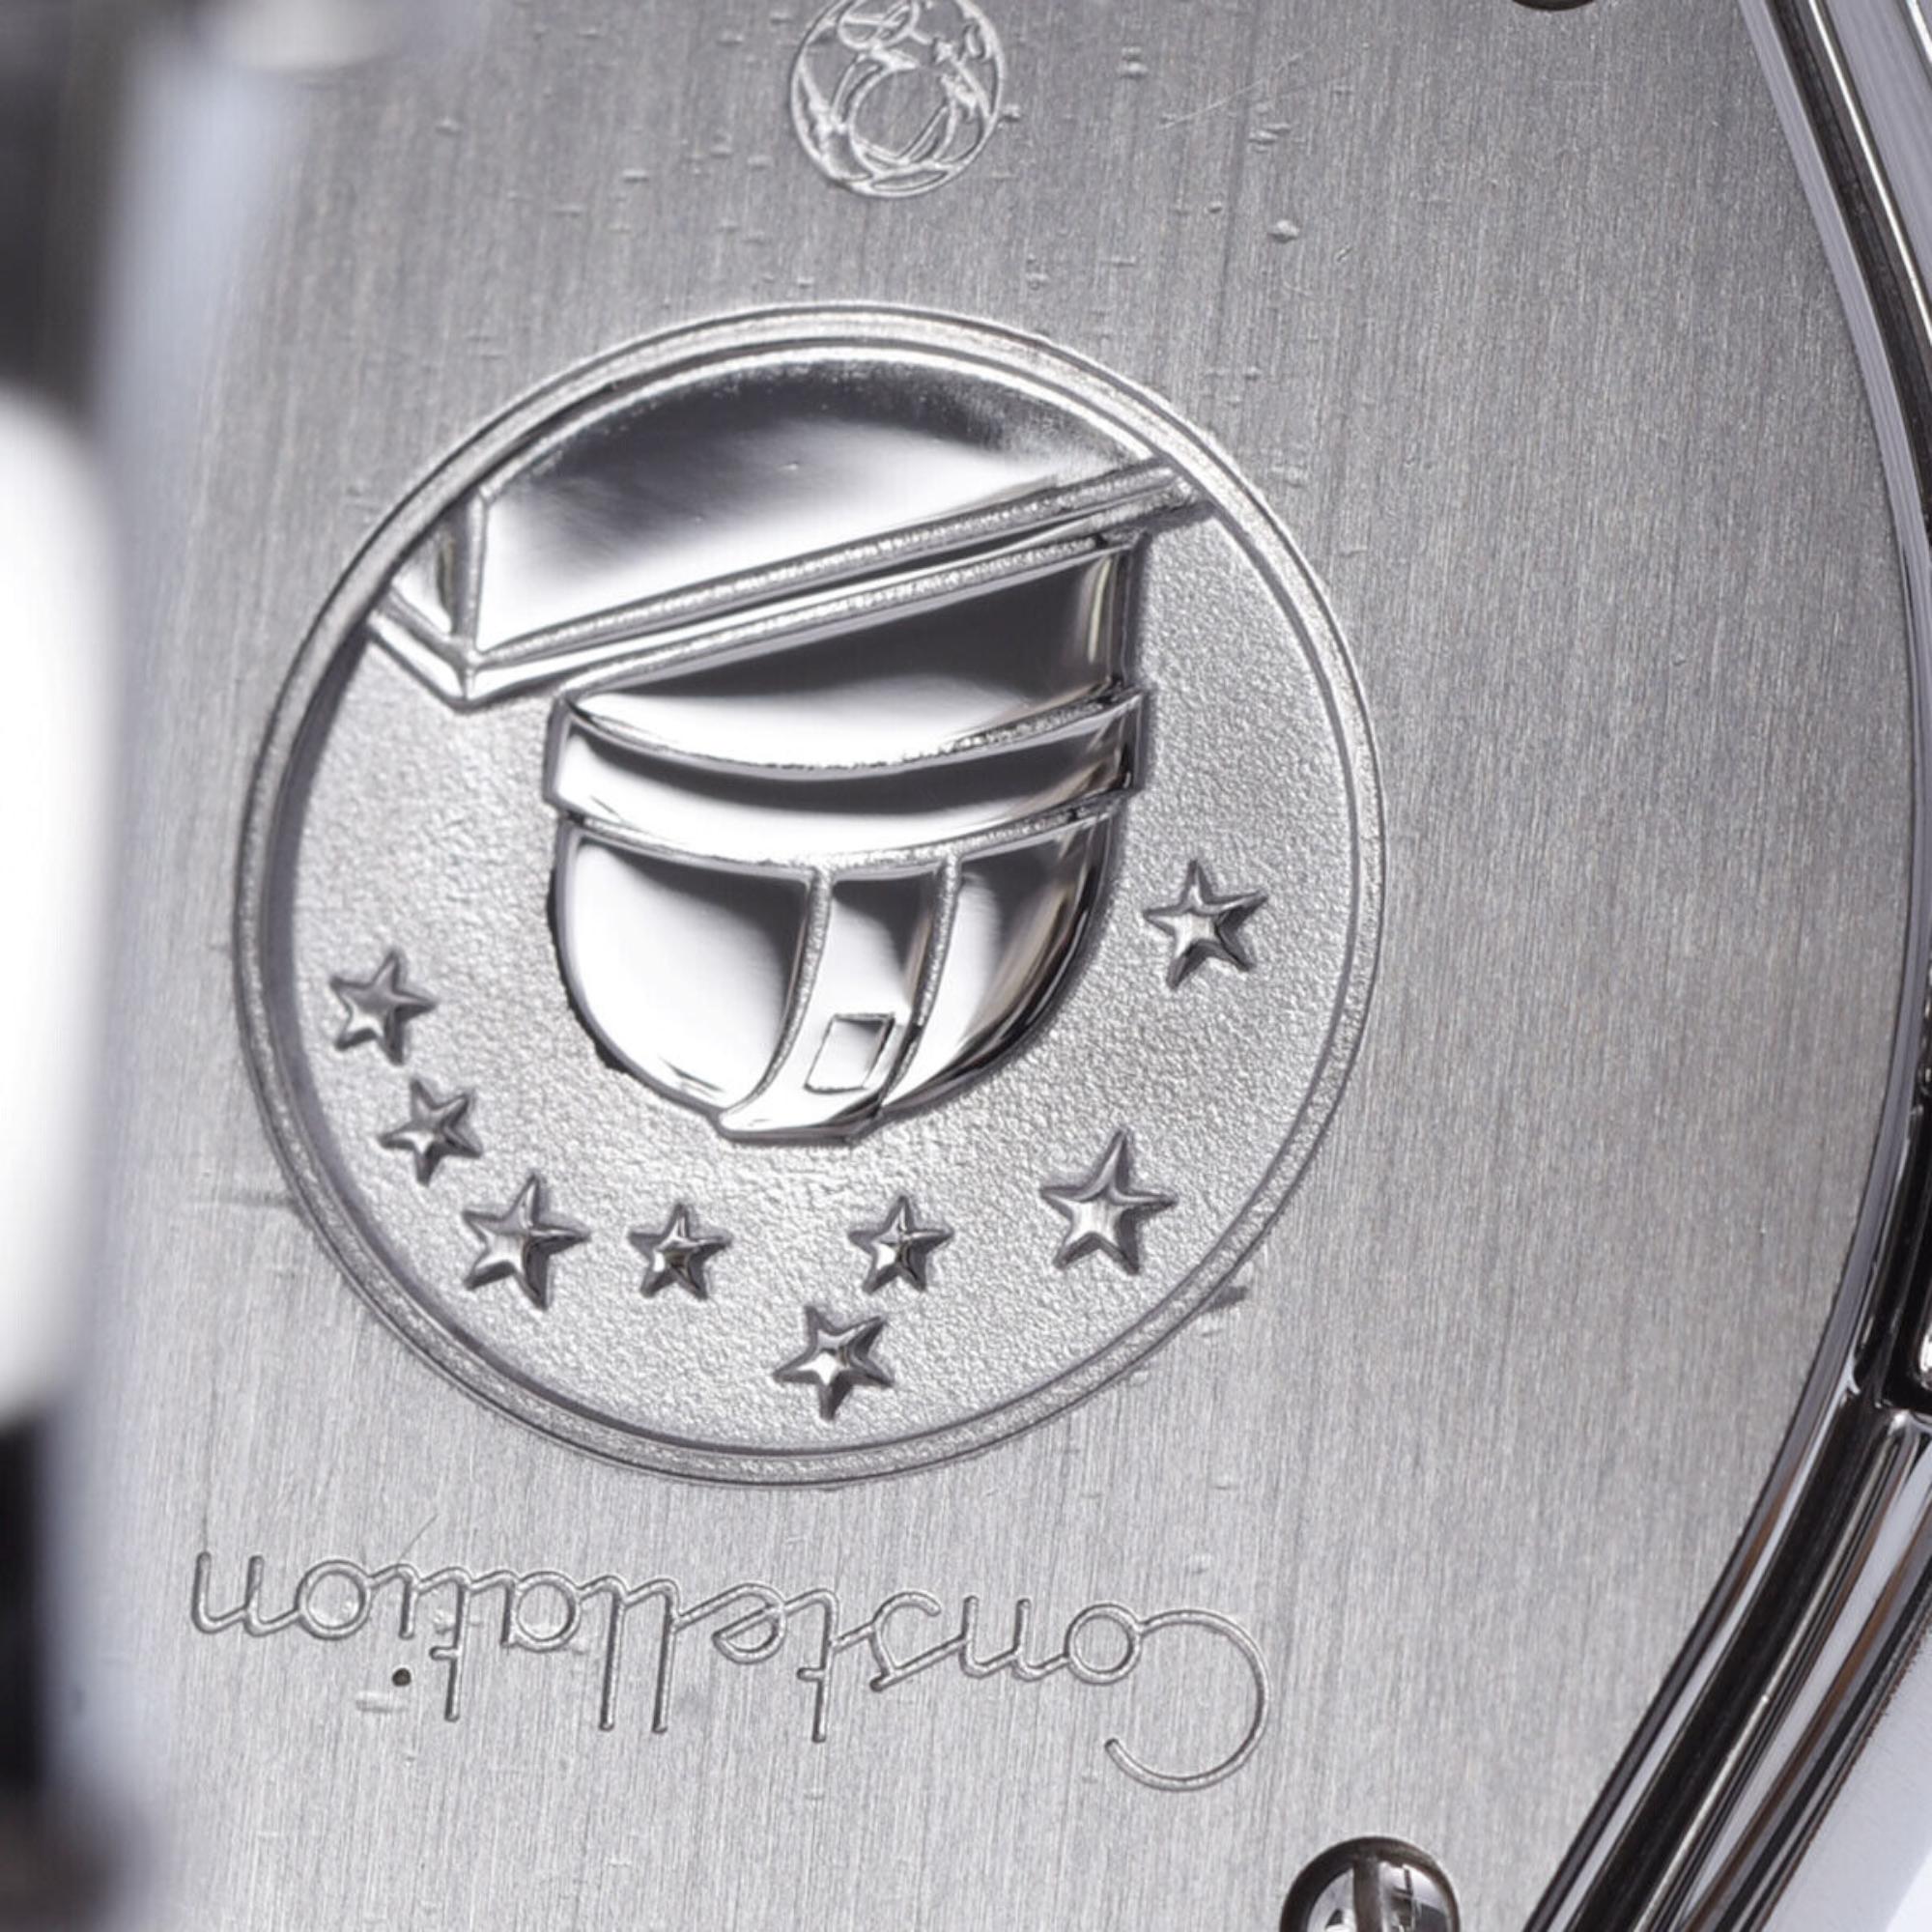 Omega White Shell Stainless Steel Constellation 123.10.24.60.05.001 Quartz Women's Wristwatch 24 Mm